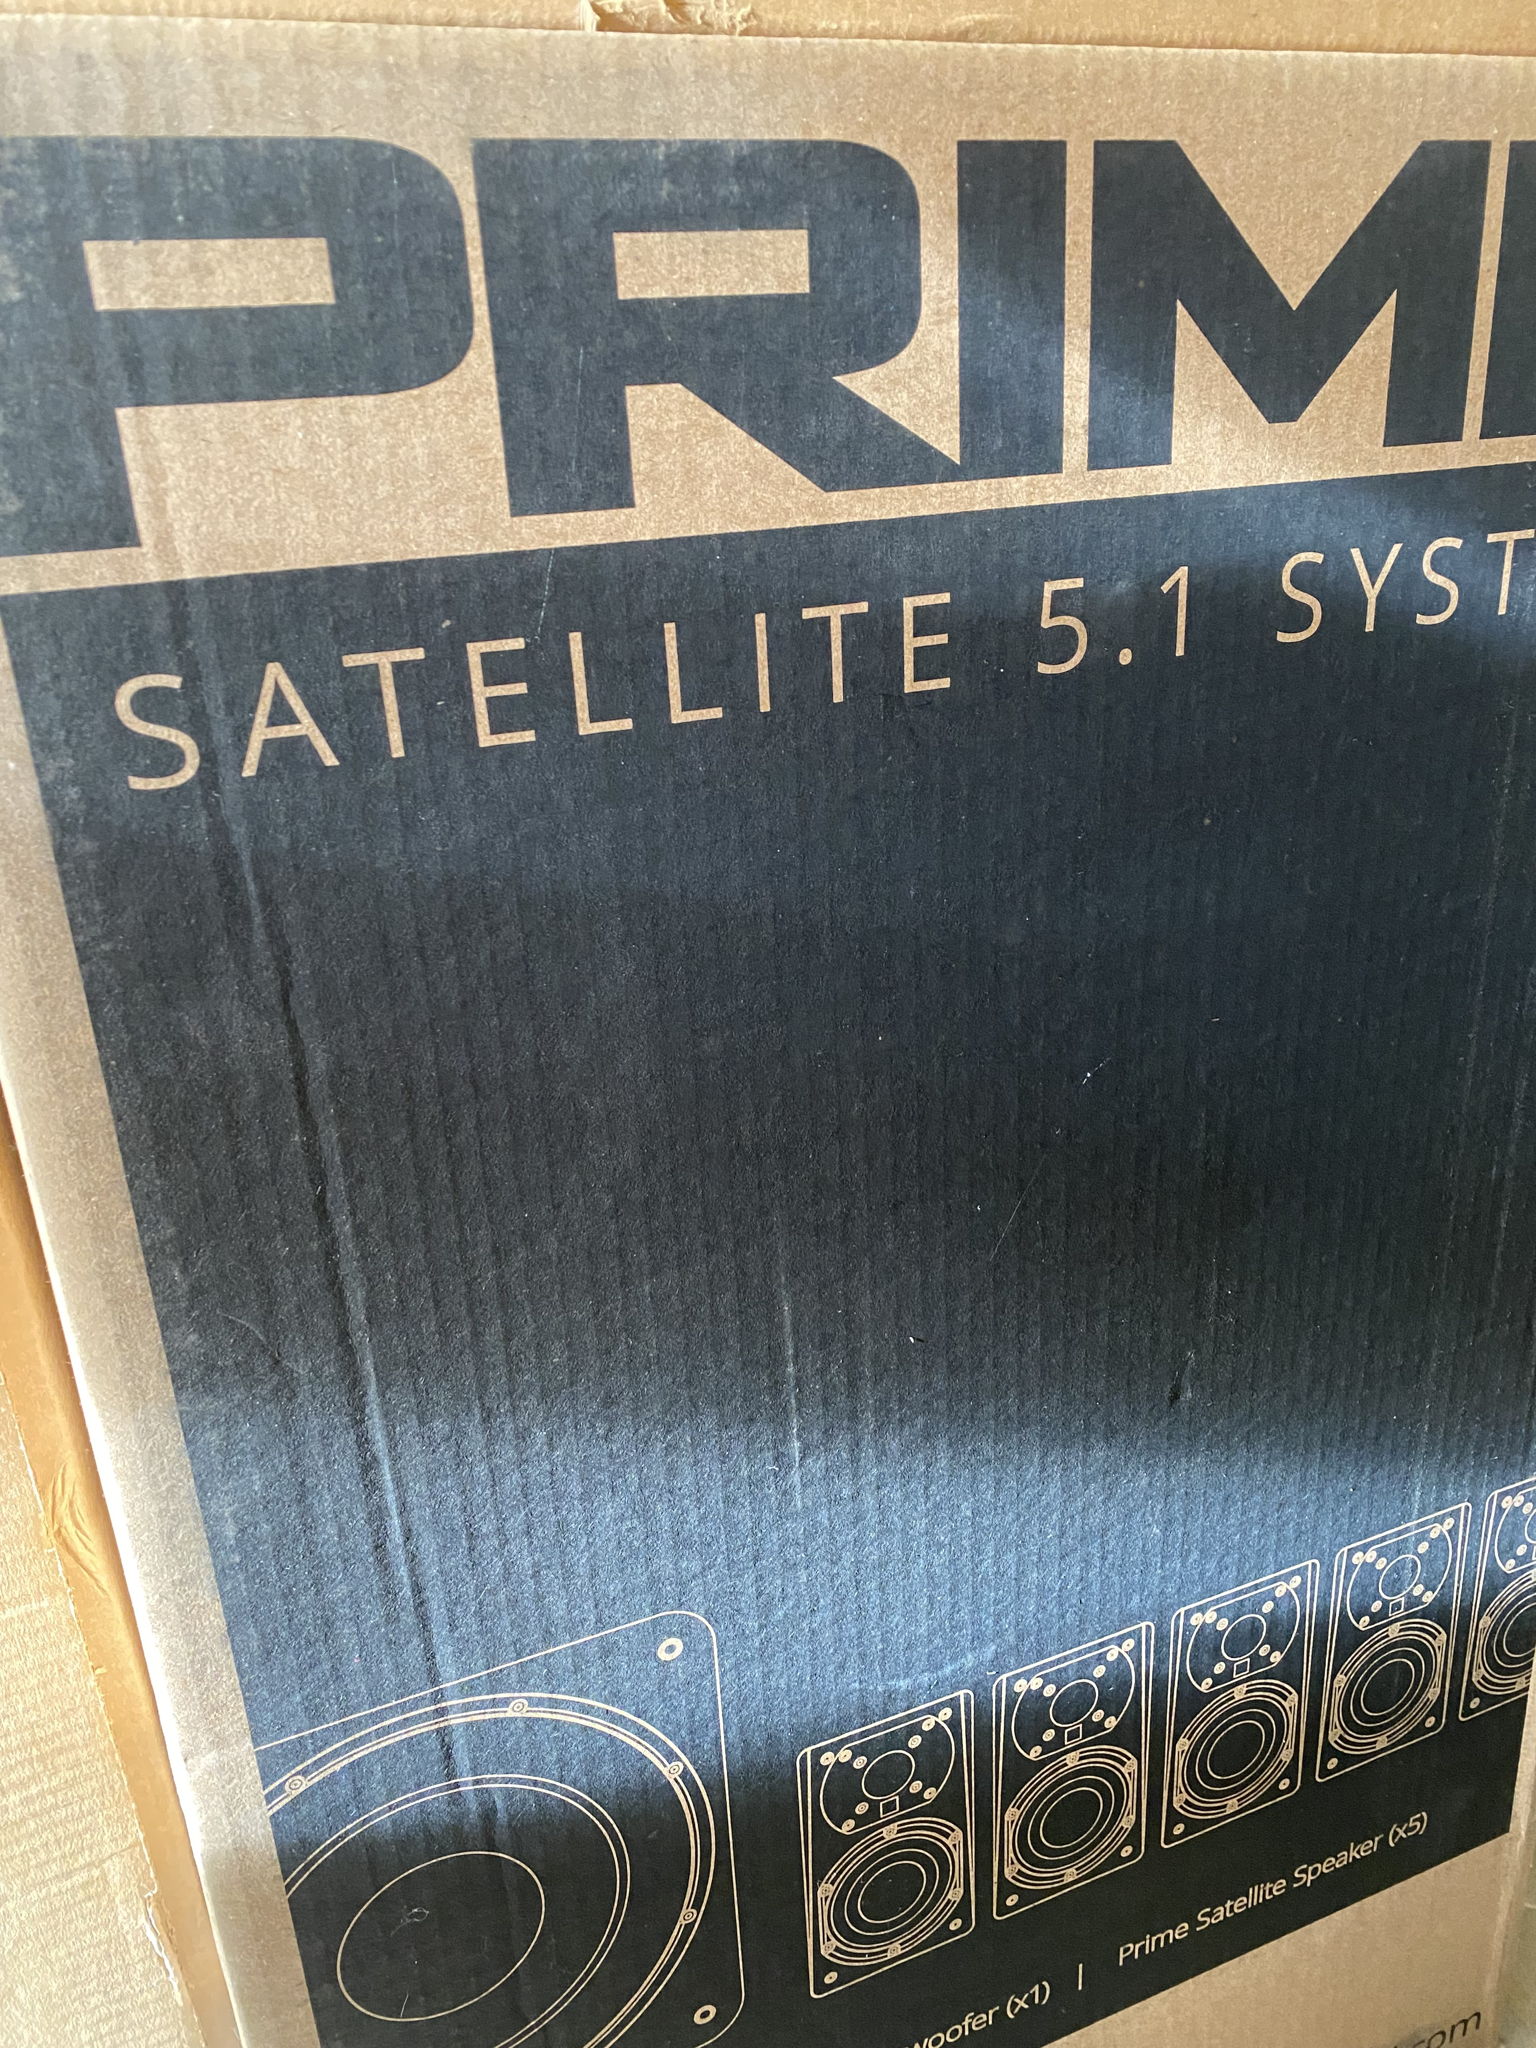 Prime Satellite 5.1 System